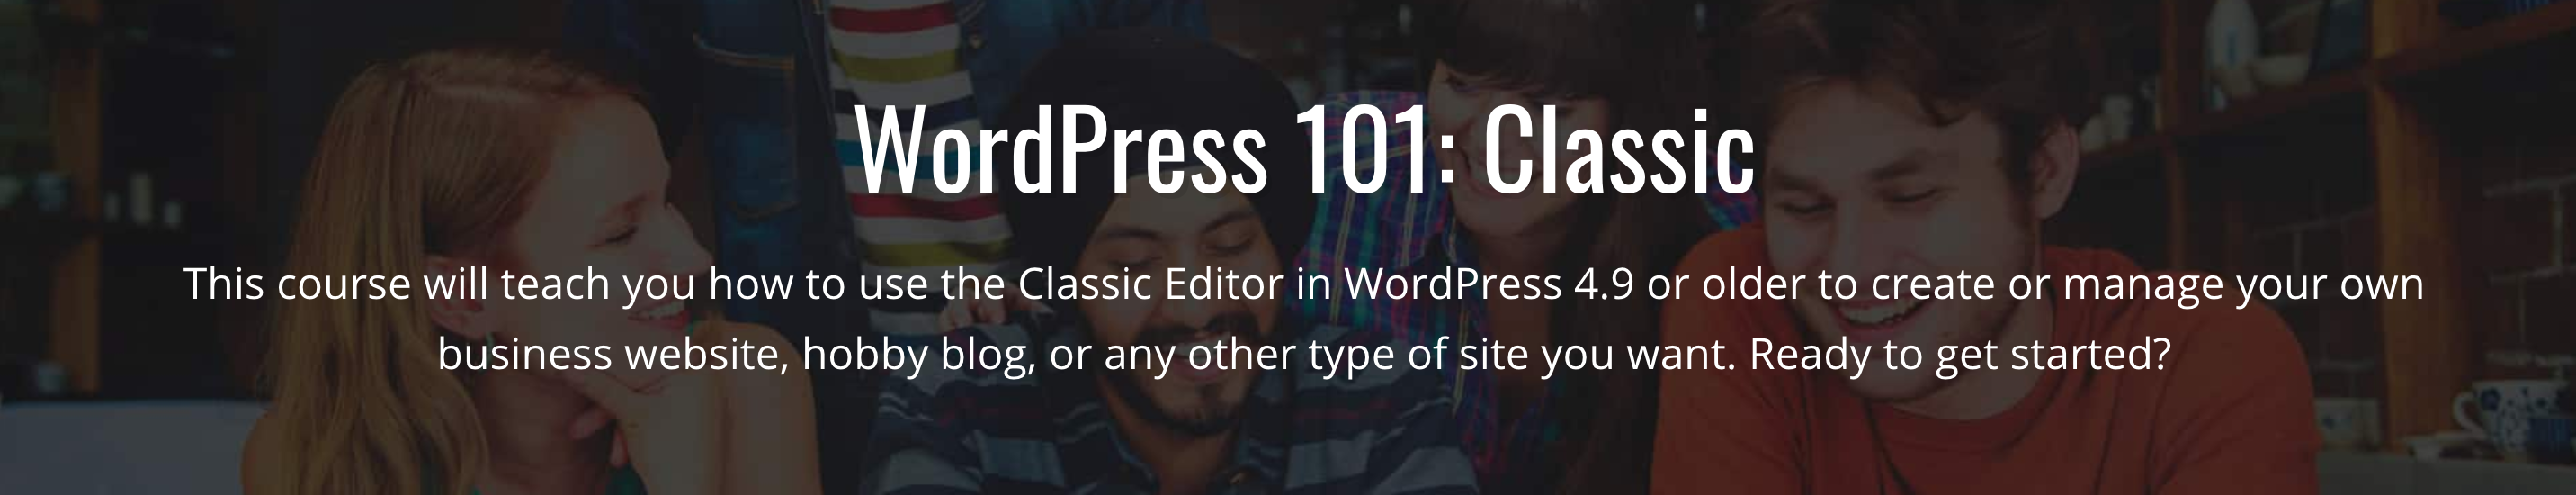 Free WordPress training at WP 101